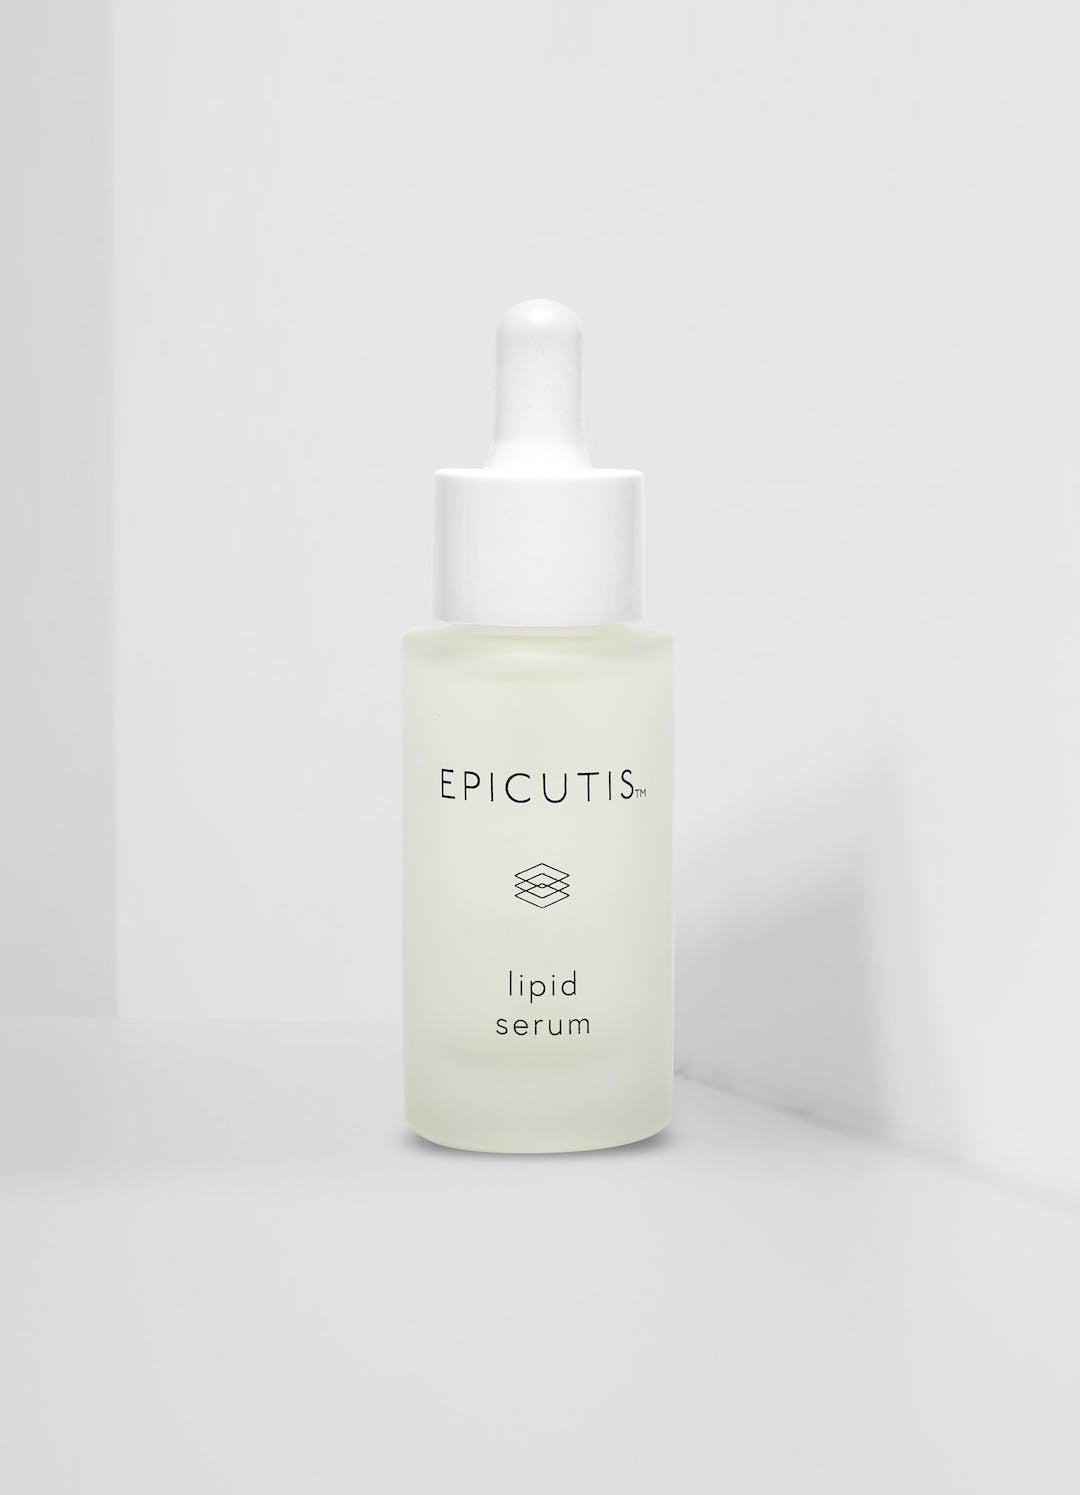 LIPID SERUM | Epicutis - The Luxe Medspa